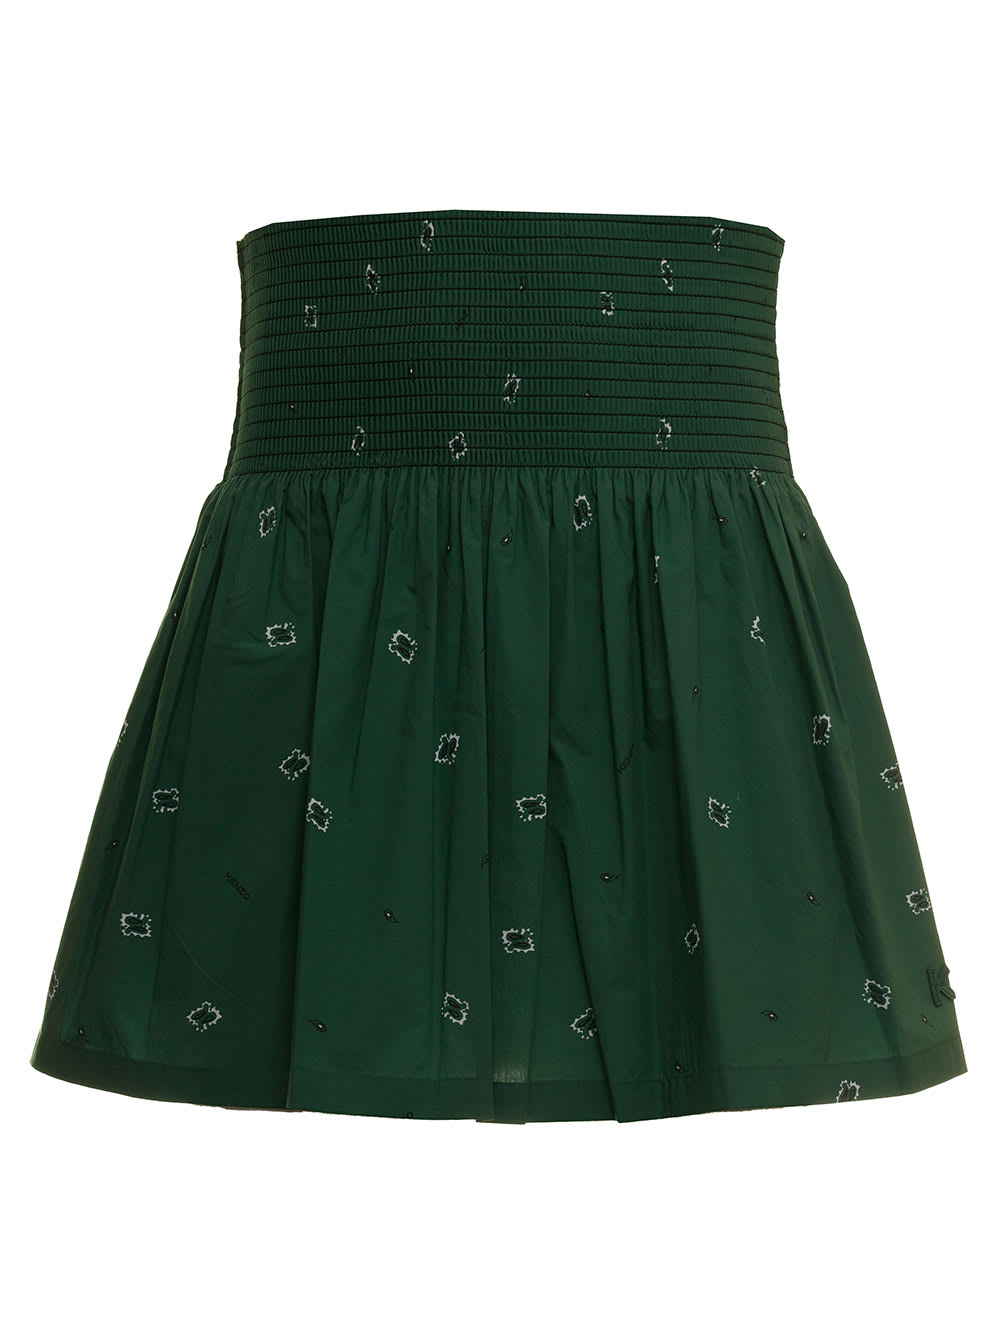 Kenzo Womans Bandana Printed Cotton Green Skirt